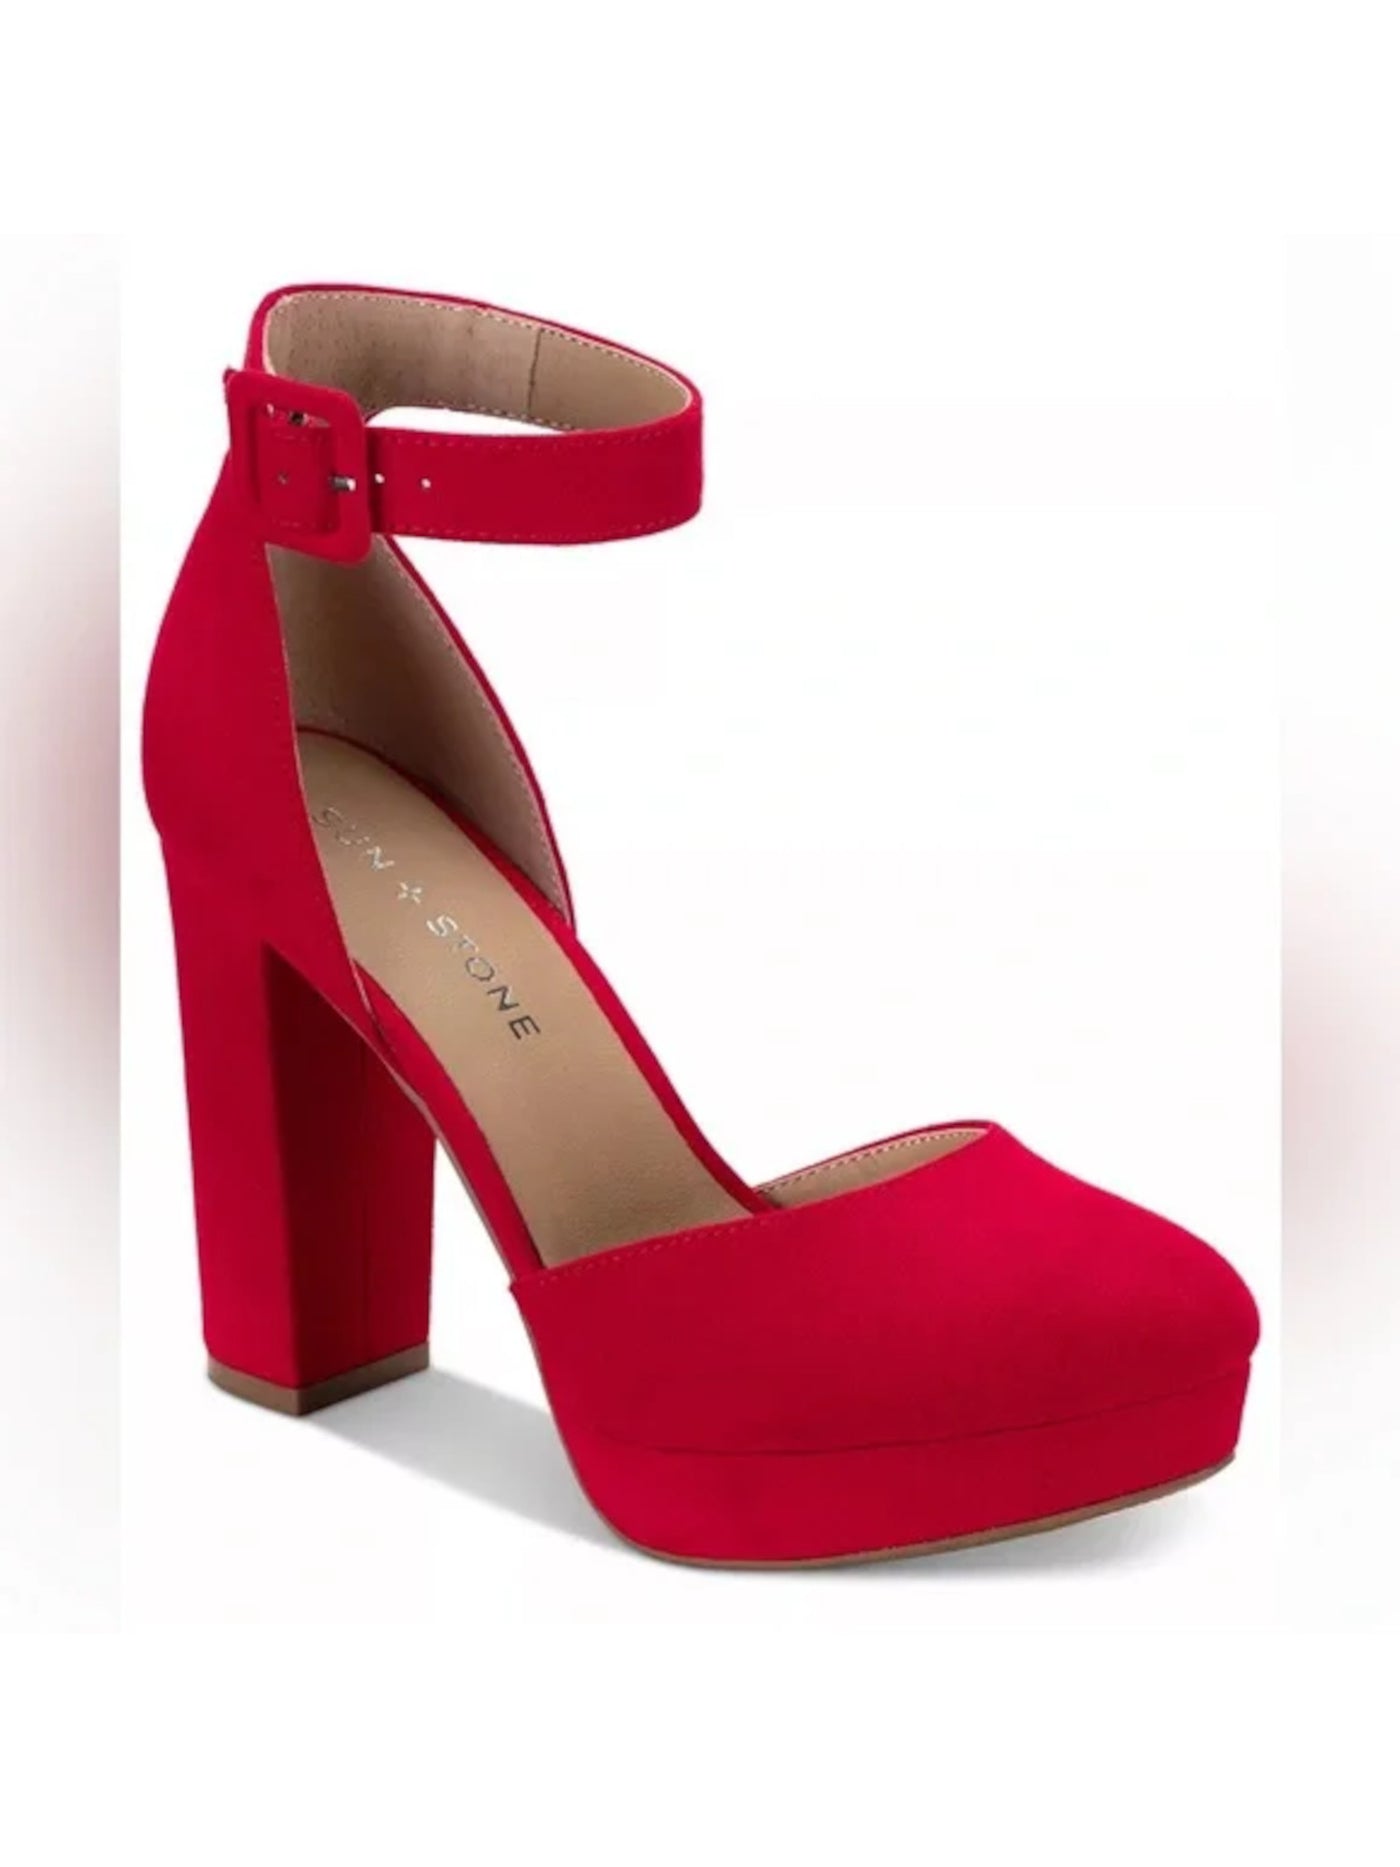 SUN STONE Womens Red 1" Platform Padded Adjustable Ankle Strap Estrella Round Toe Block Heel Buckle Dress Pumps Shoes 10 M